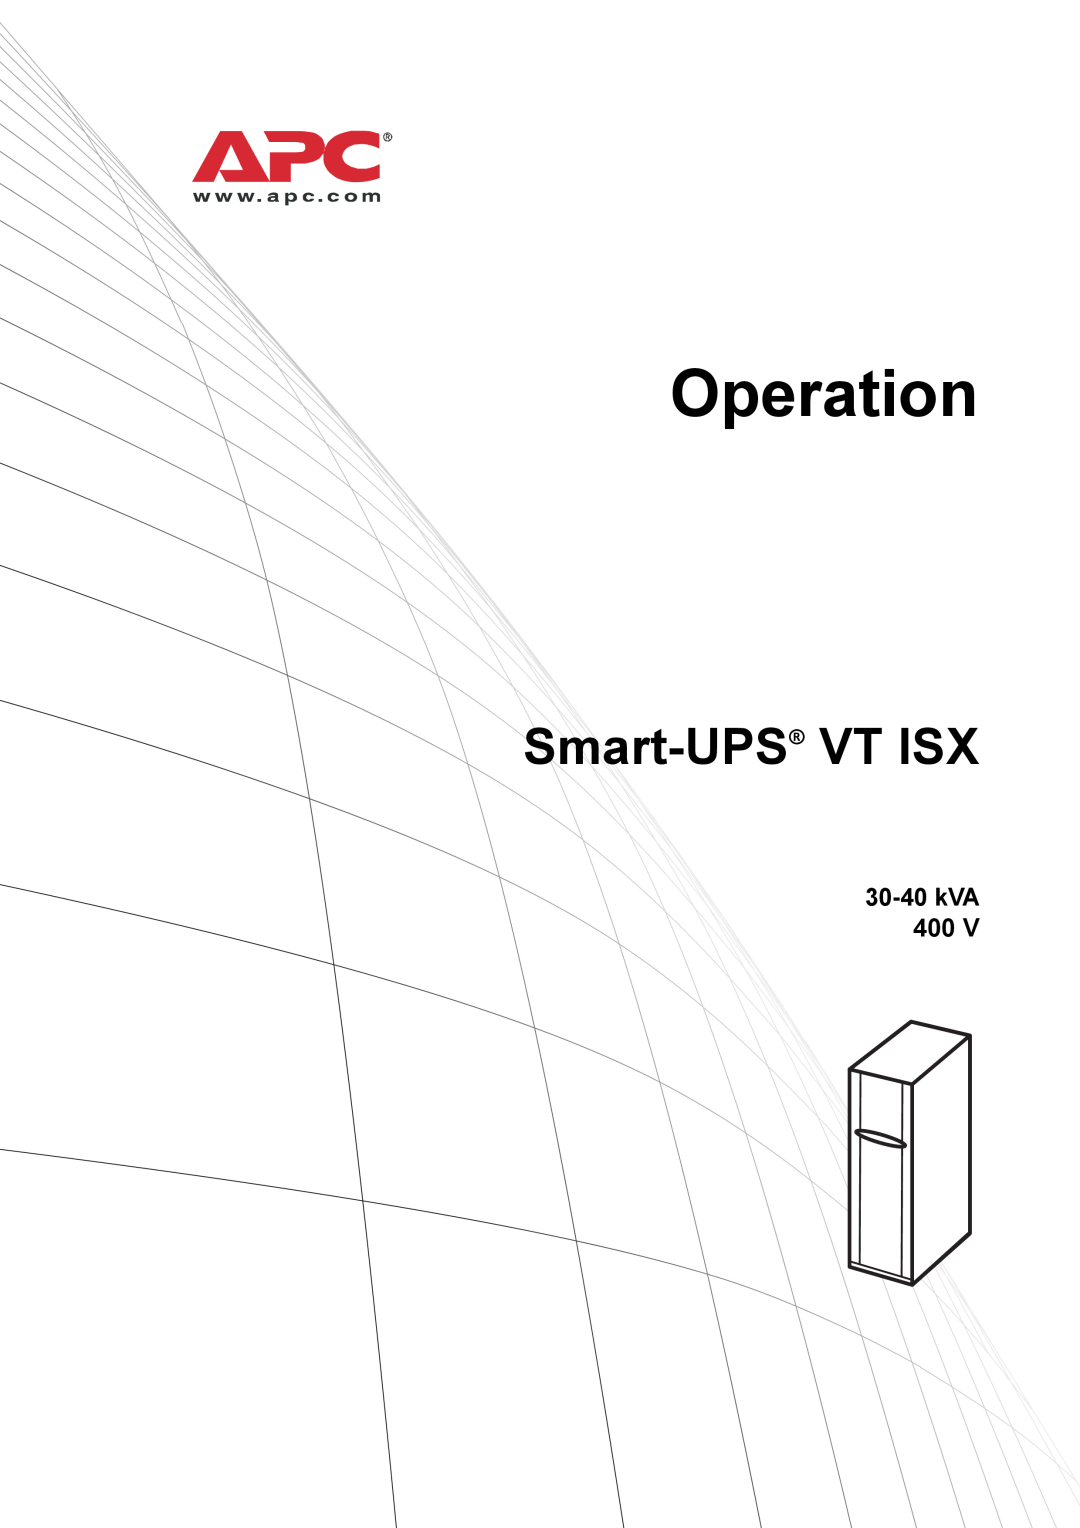 American Power Conversion manual Operation, Smart-UPS VT ISX, kVA 400 